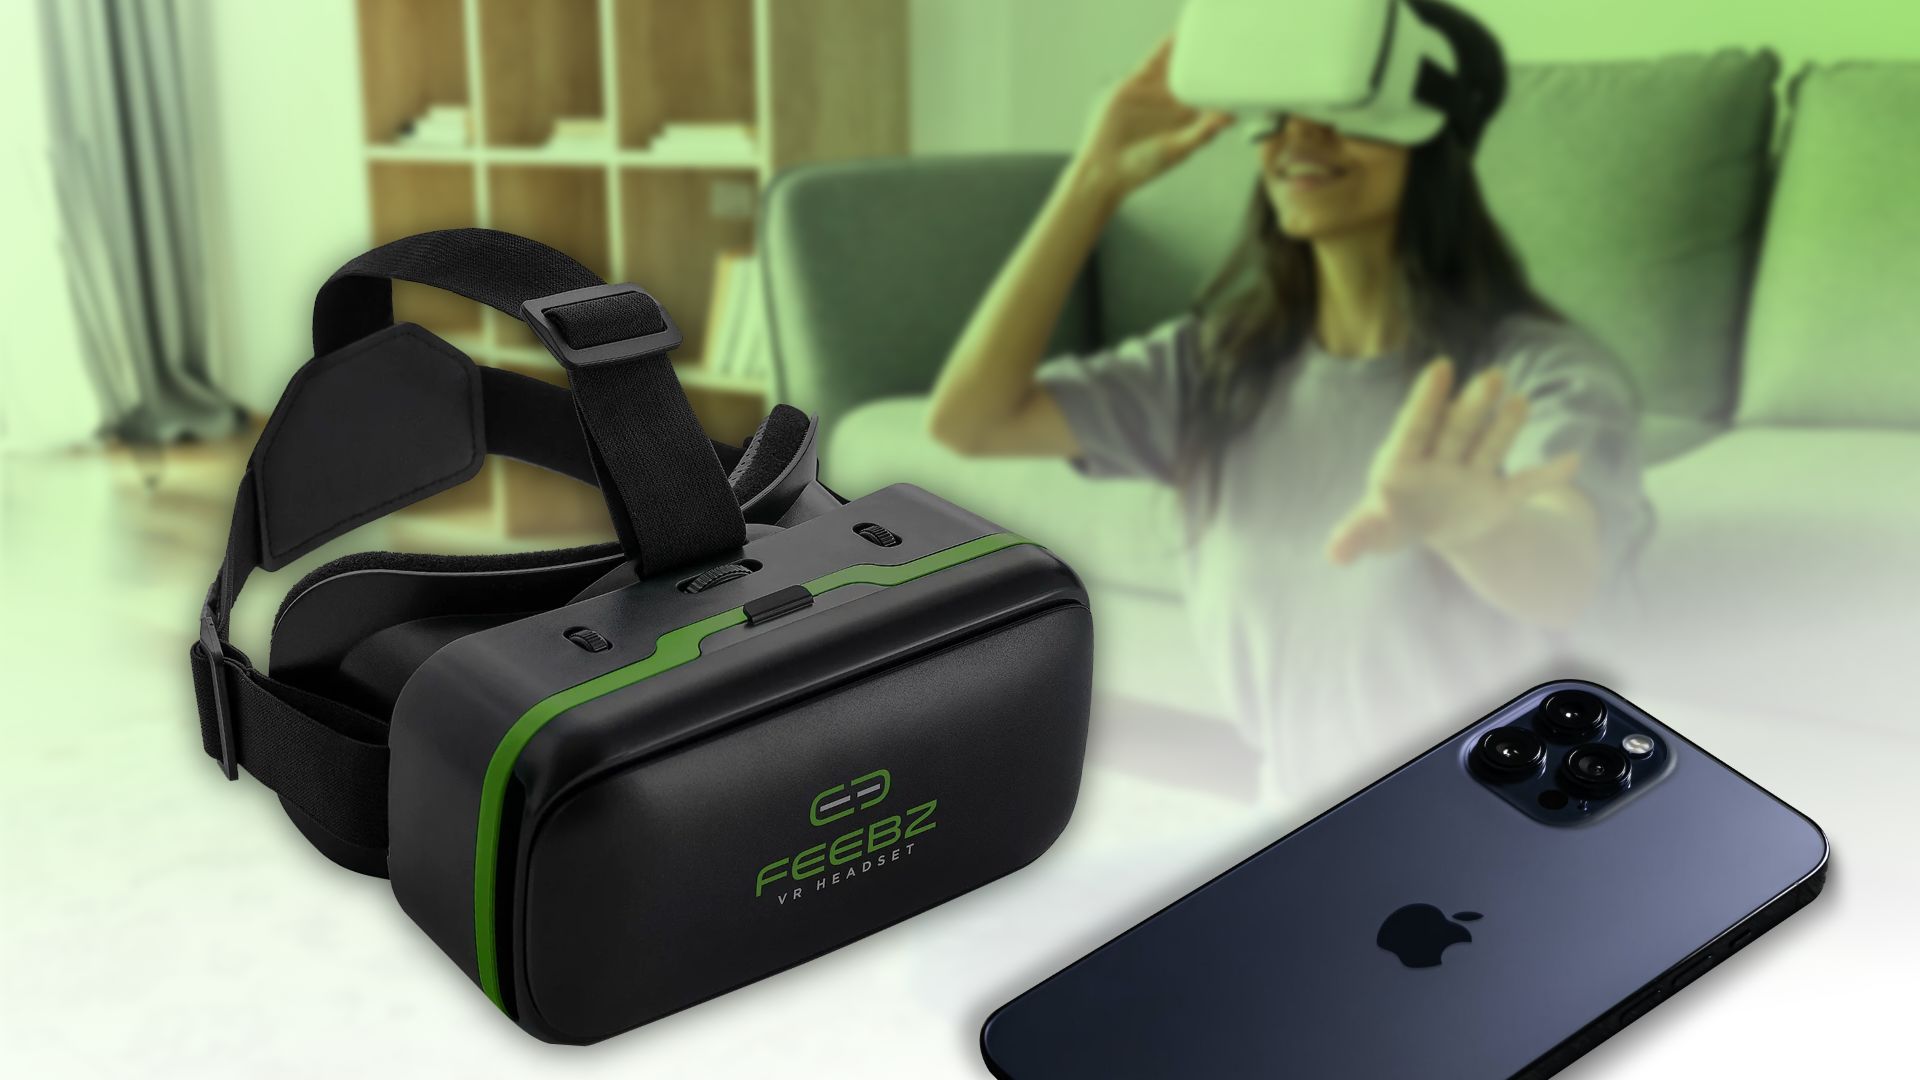 Feebz Virtual Reality Goggles